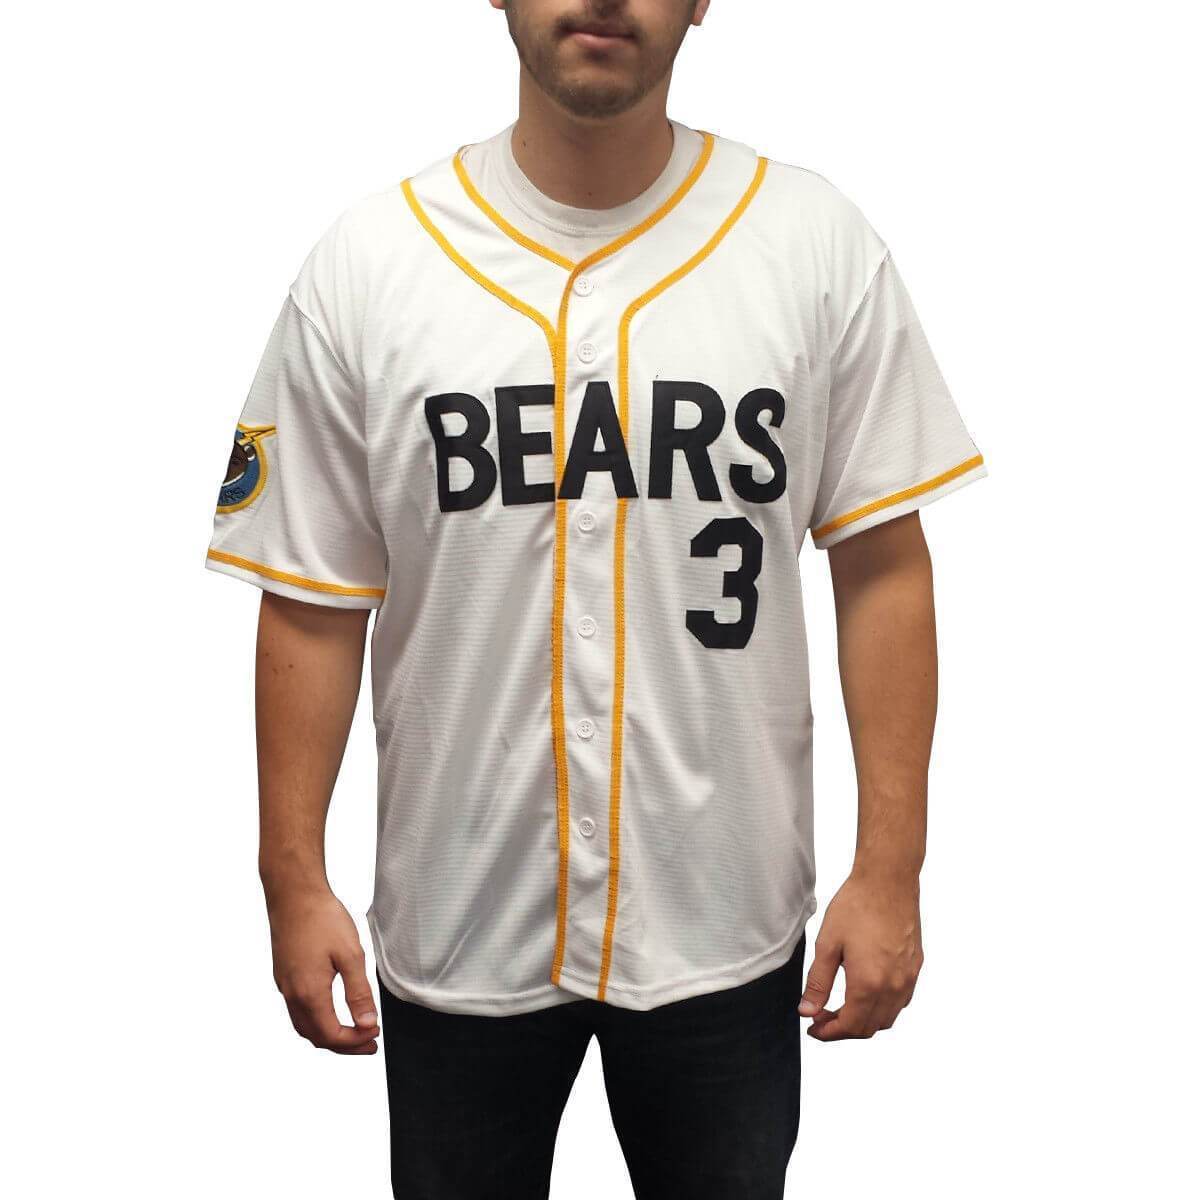 Bad News Bears Baseball Jerseys - Jersey Champs